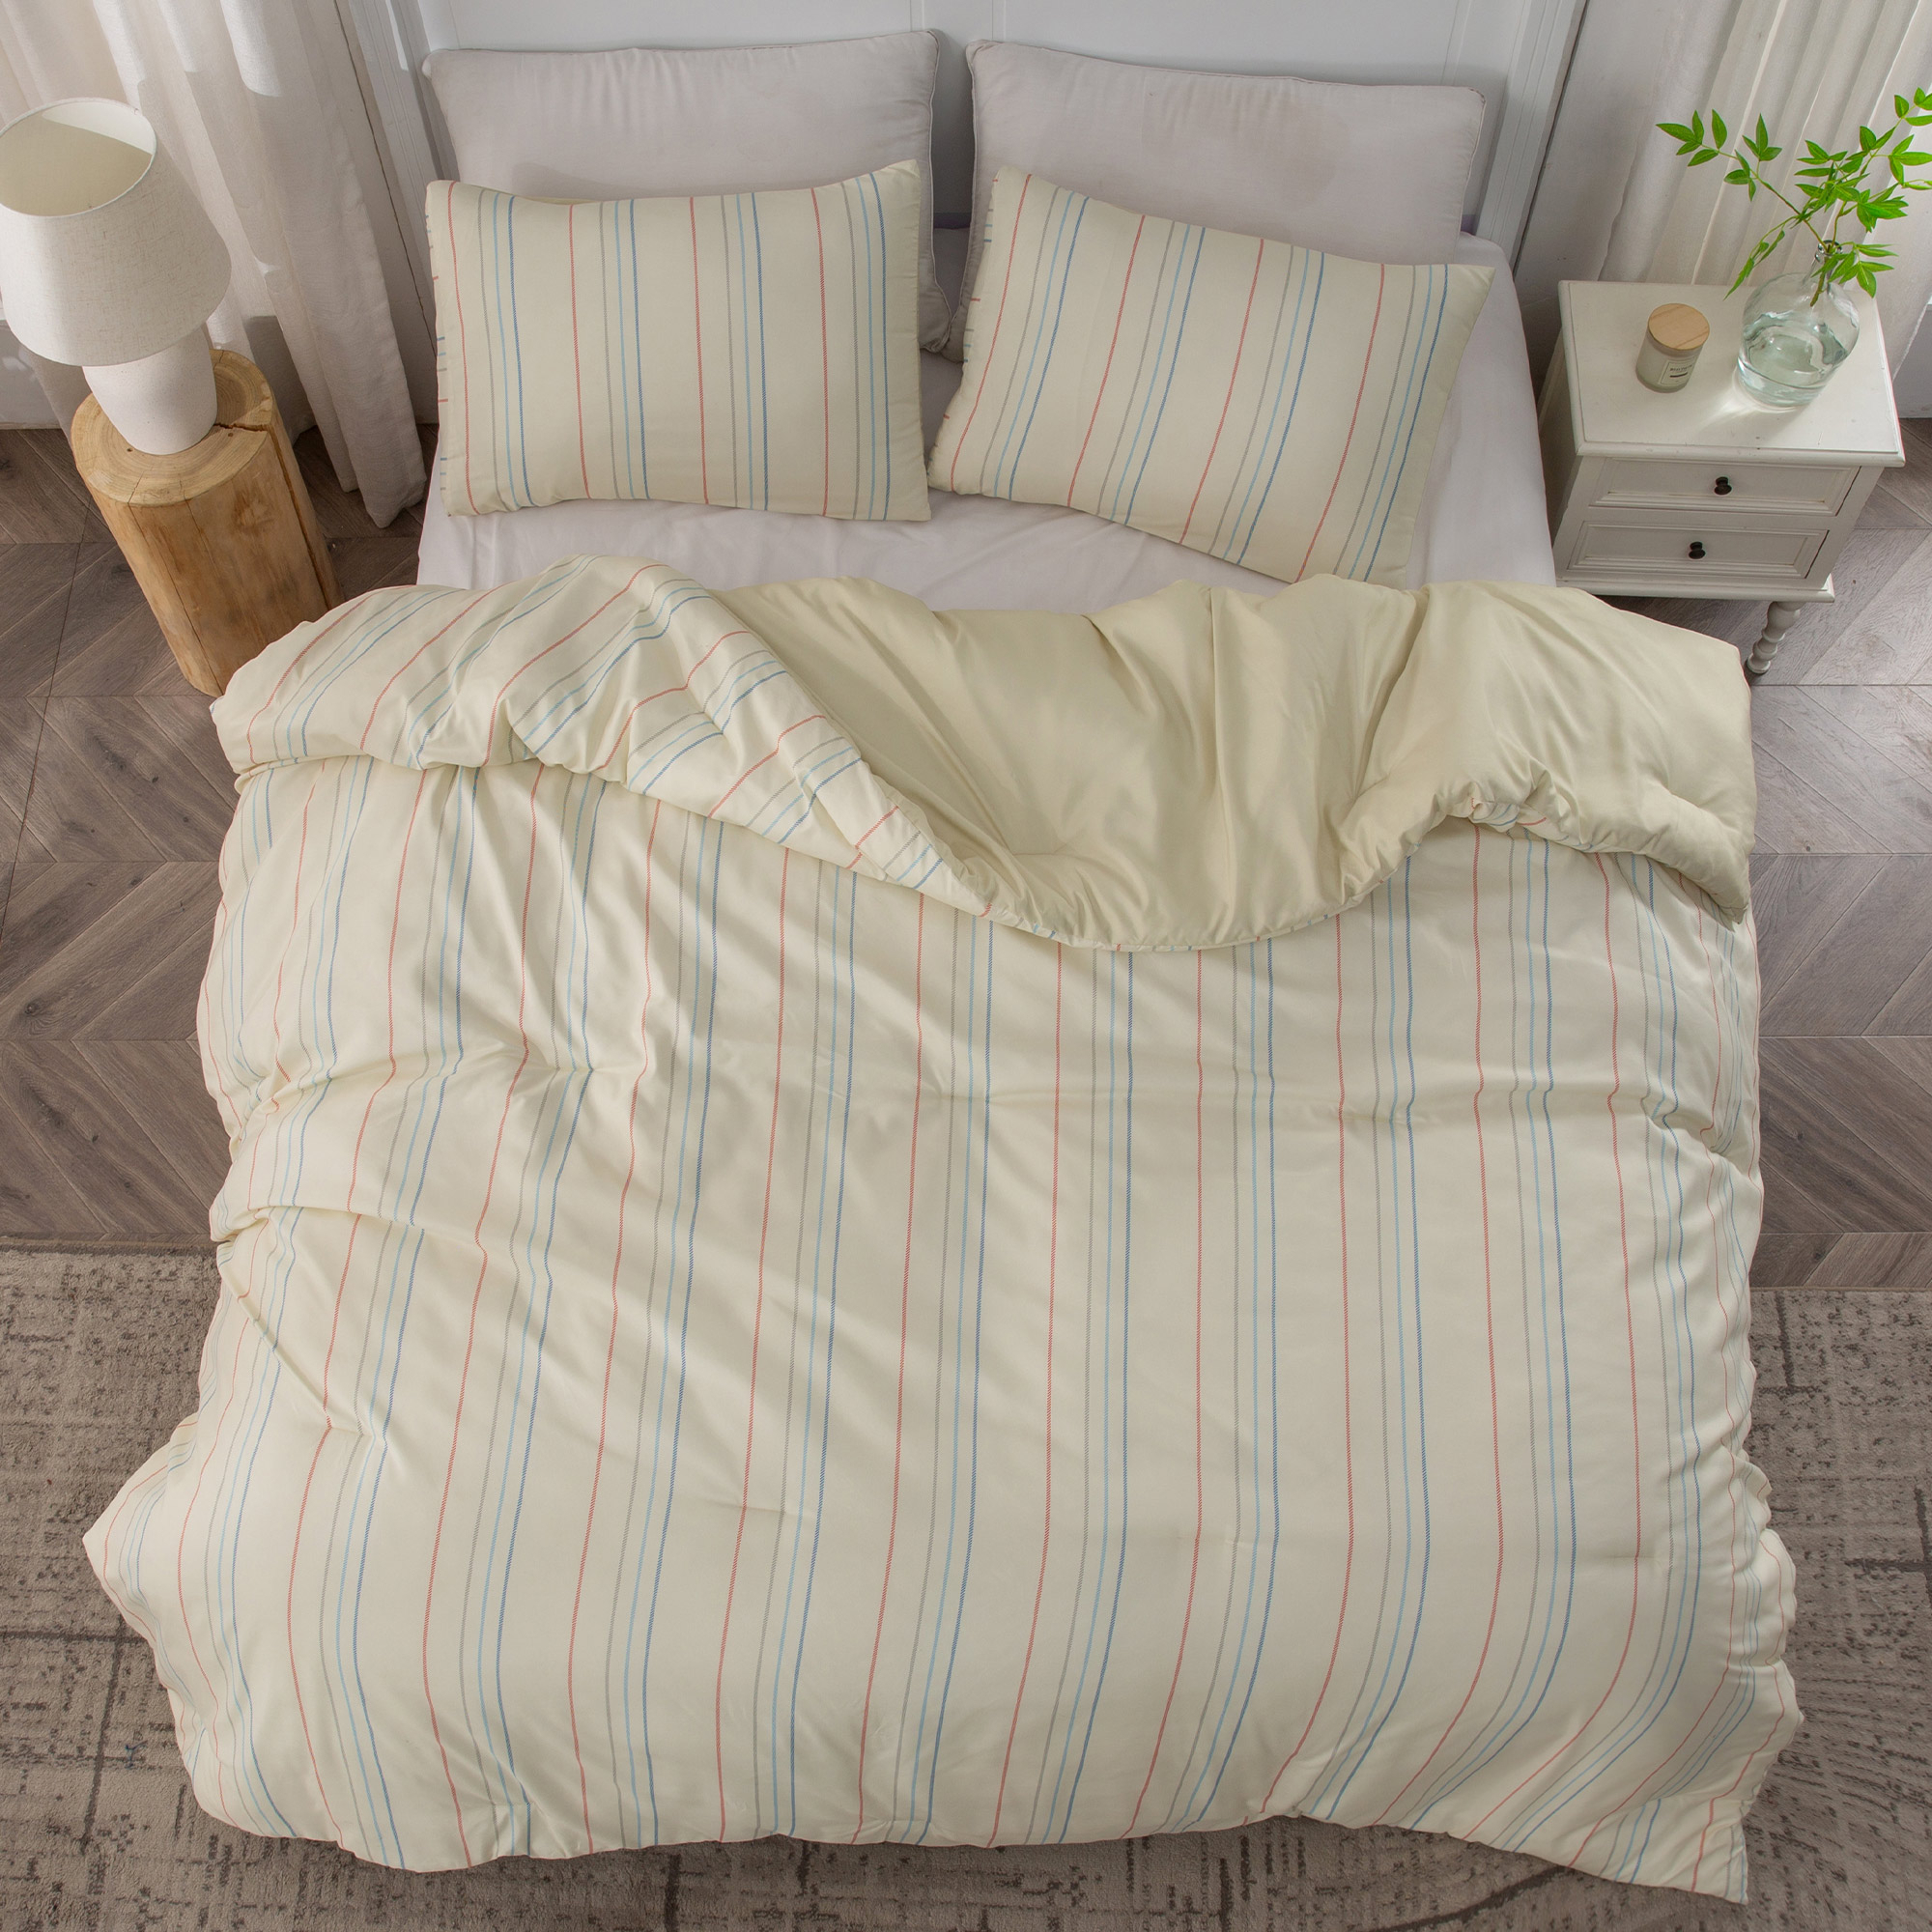 Ultra Soft Reversible Printed Stripe Microfiber Comforter Set - All-Season Warmth, Cream - Full/Queen